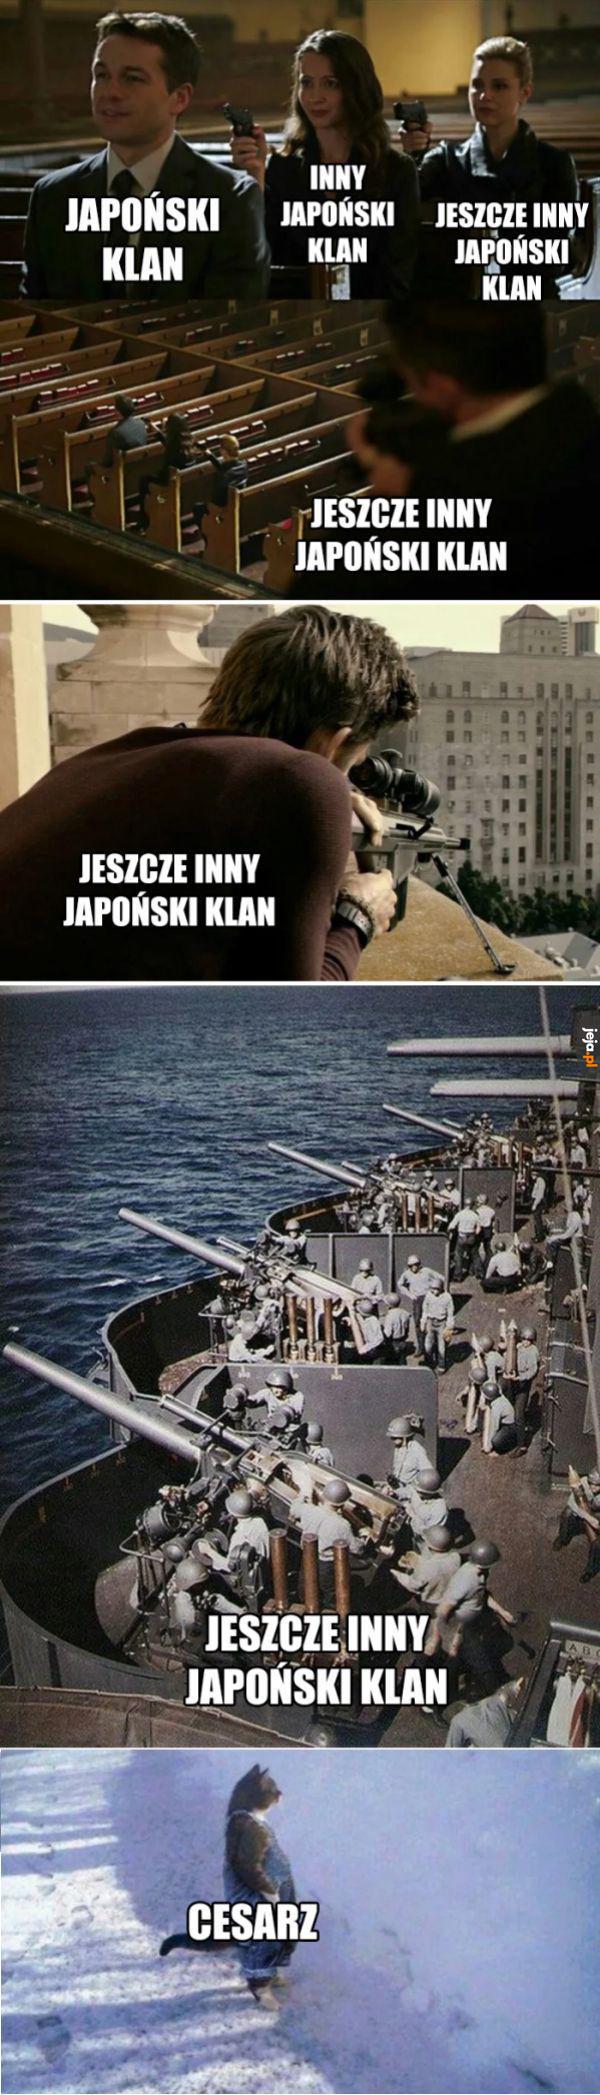 Historia Japonii